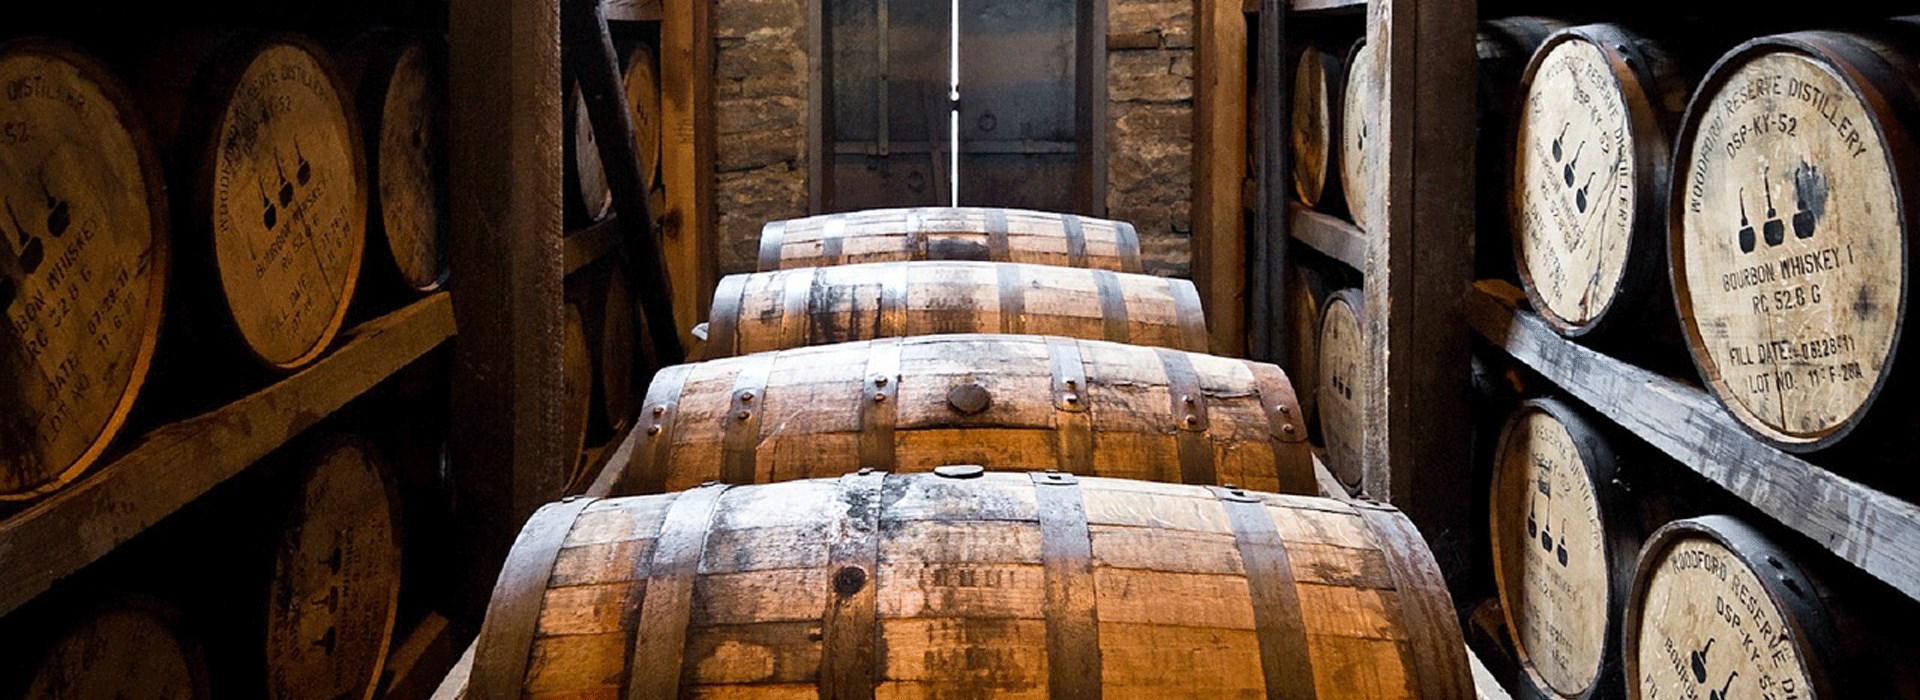 Visiter Une Distillerie de Whisky - Ecosse